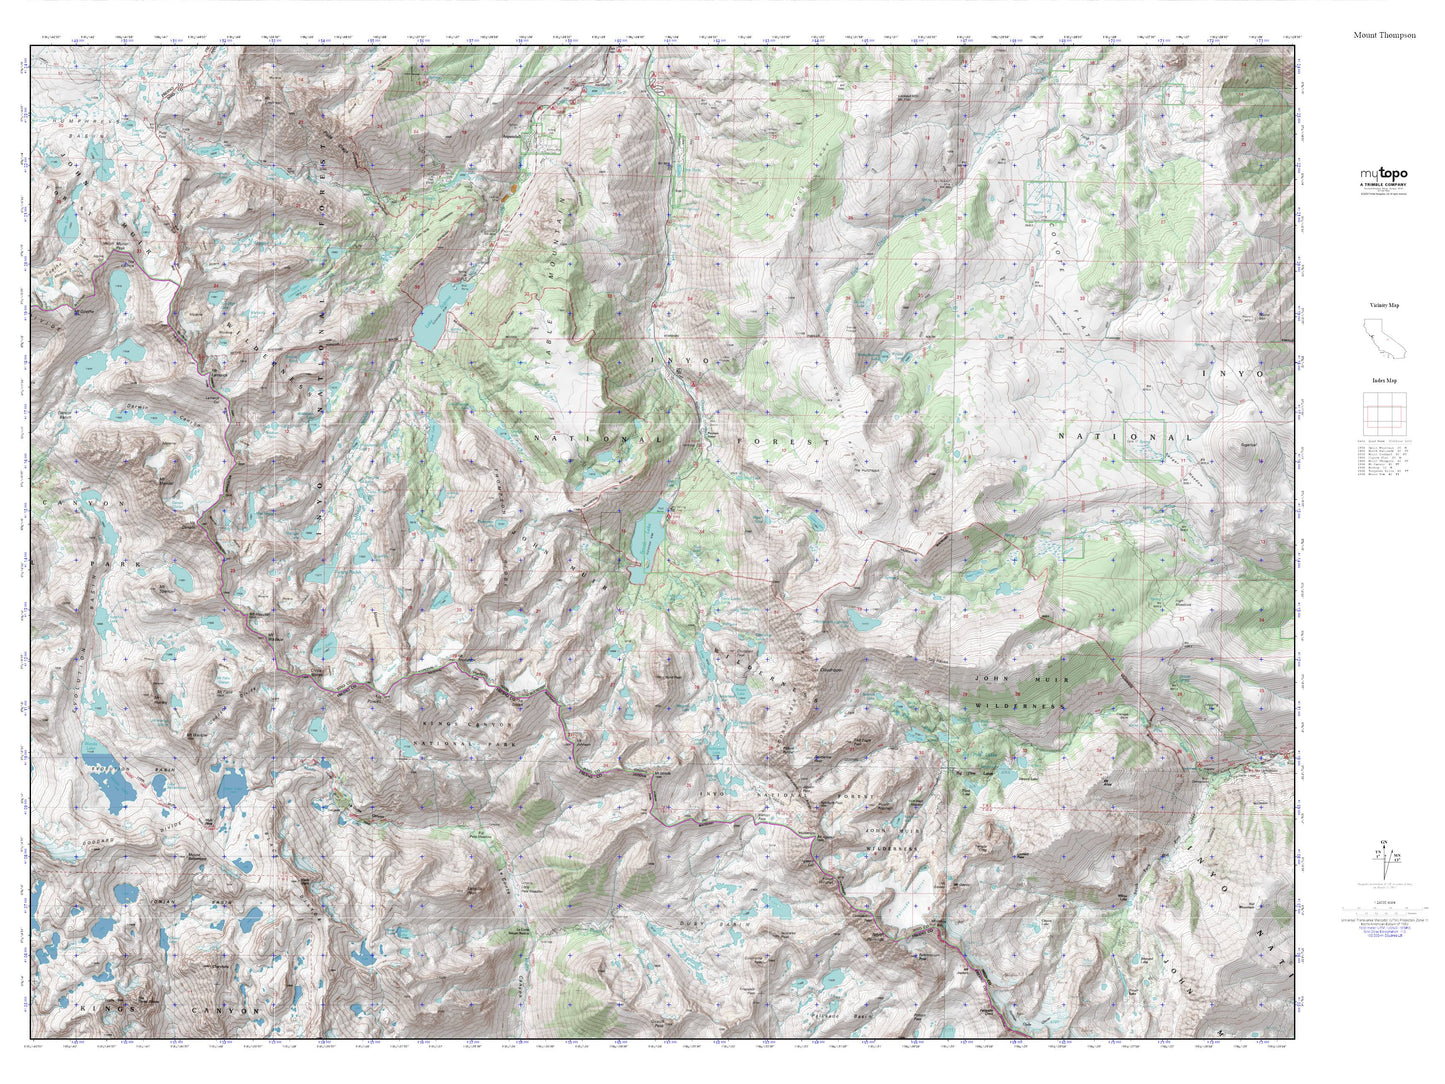 Mount Thompson MyTopo Explorer Series Map Image